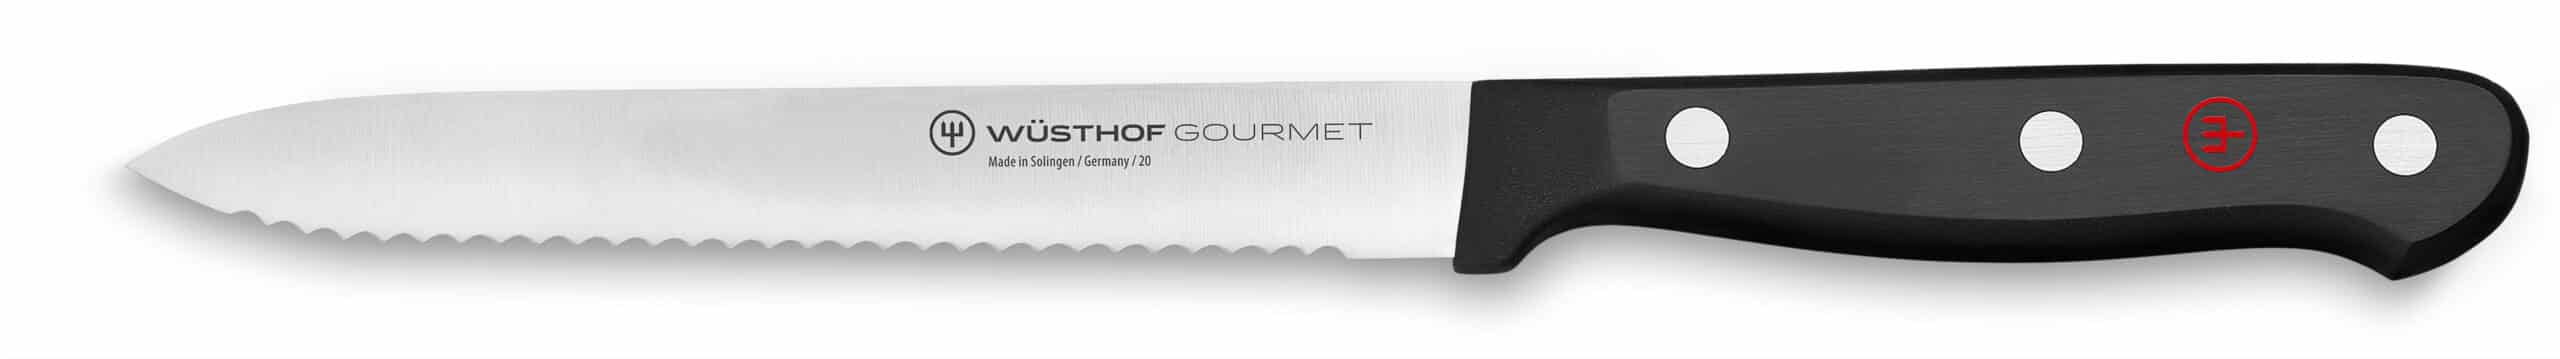 Wusthof Gourmet Utility Knife 14cm